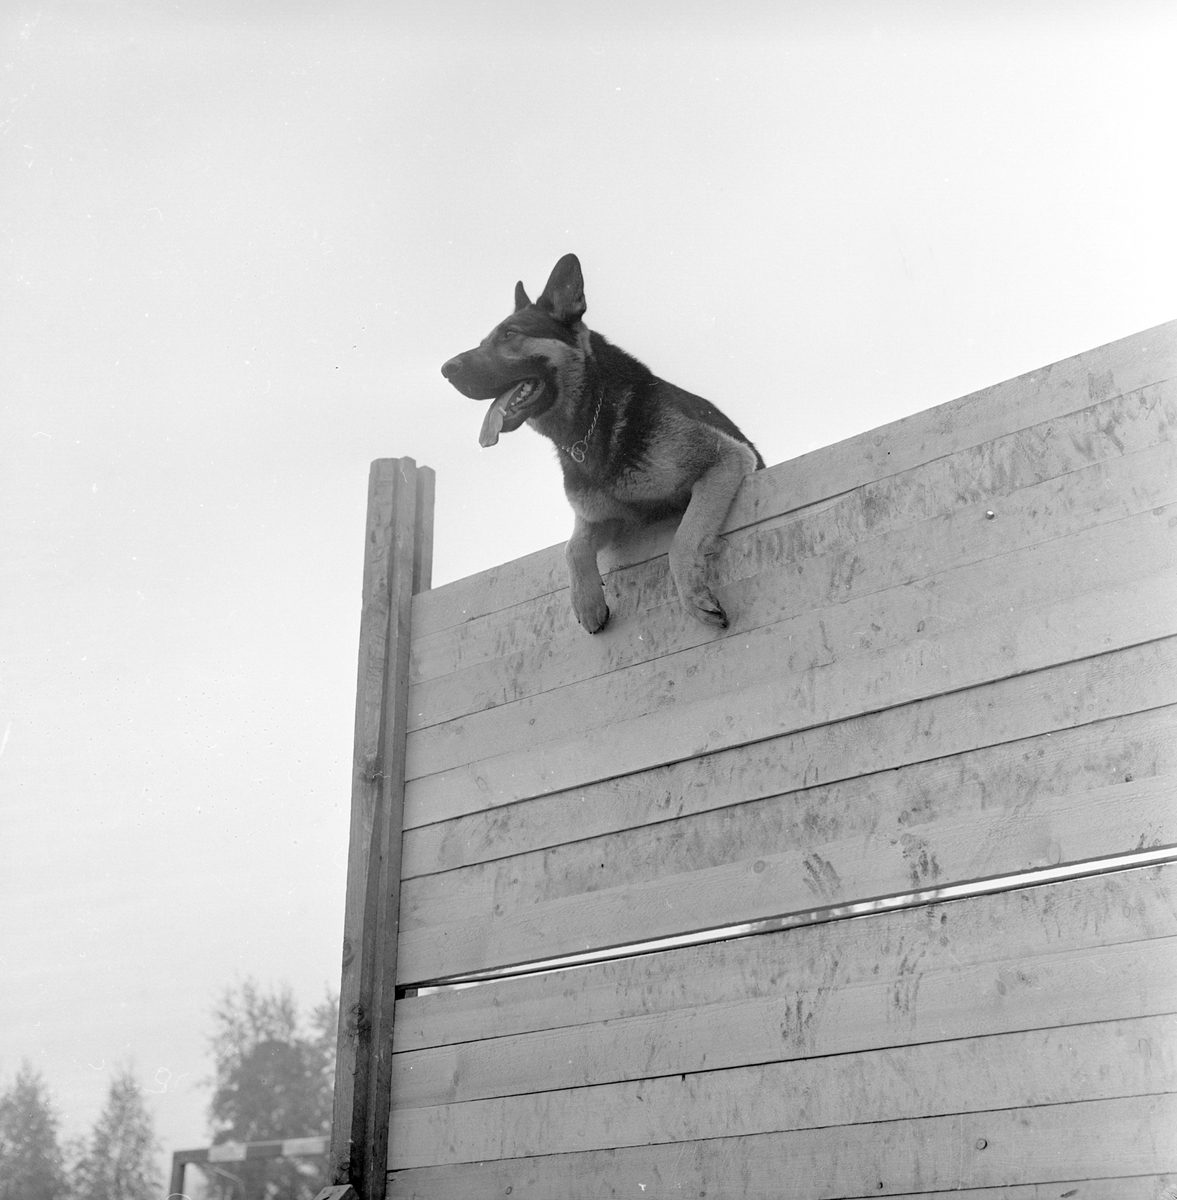 Politihund-konkurranse ved Hamar.
Fotografert 1963